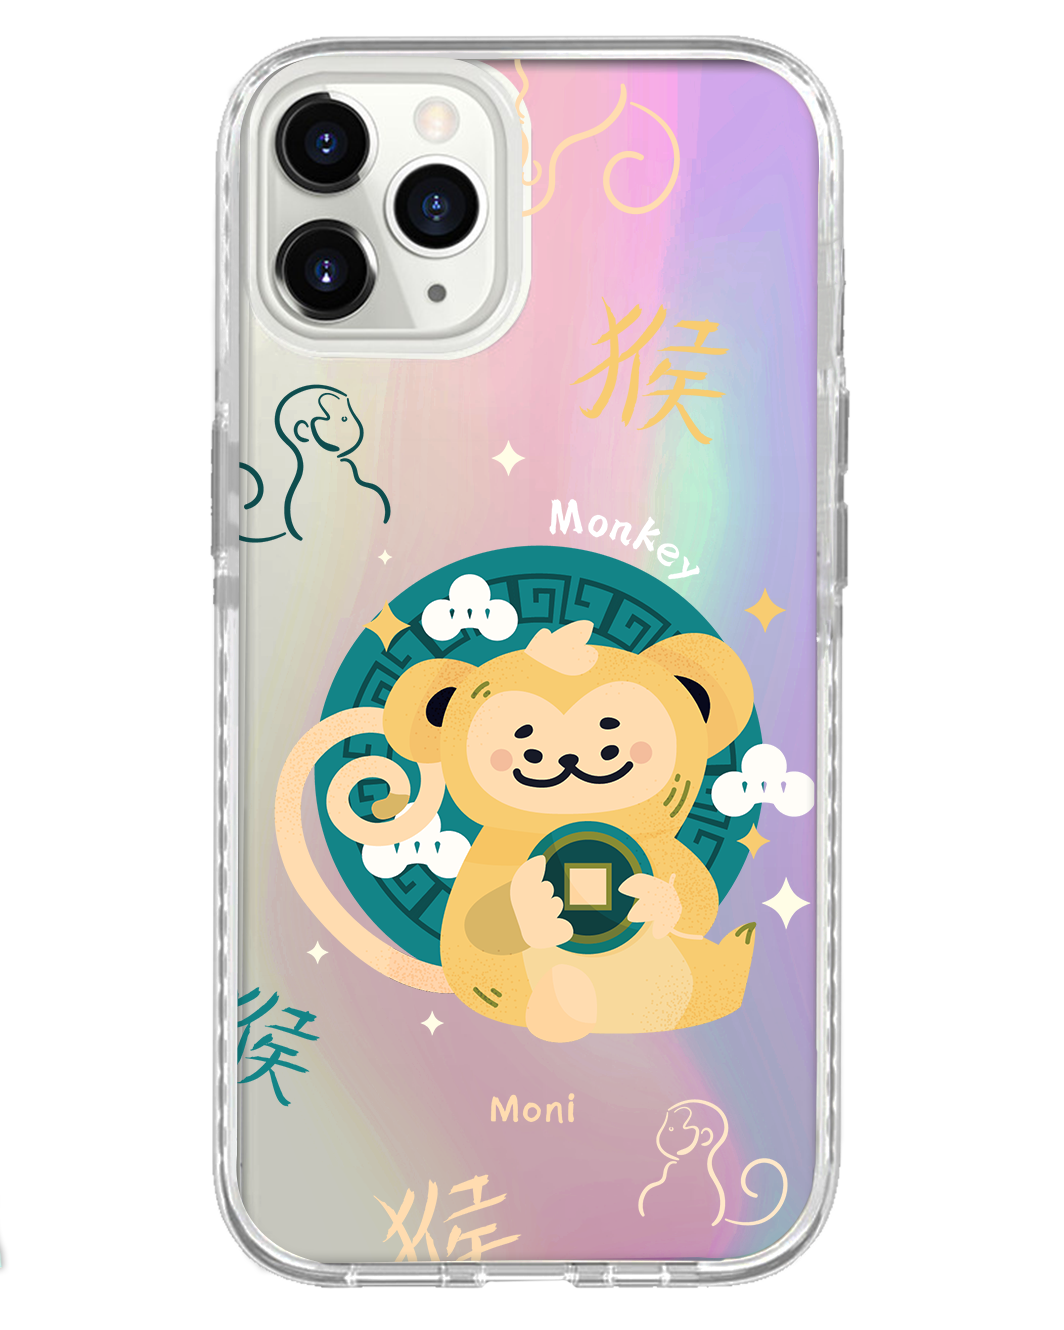 iPhone Rearguard Holo - Monkey (Chinese Zodiac / Shio)